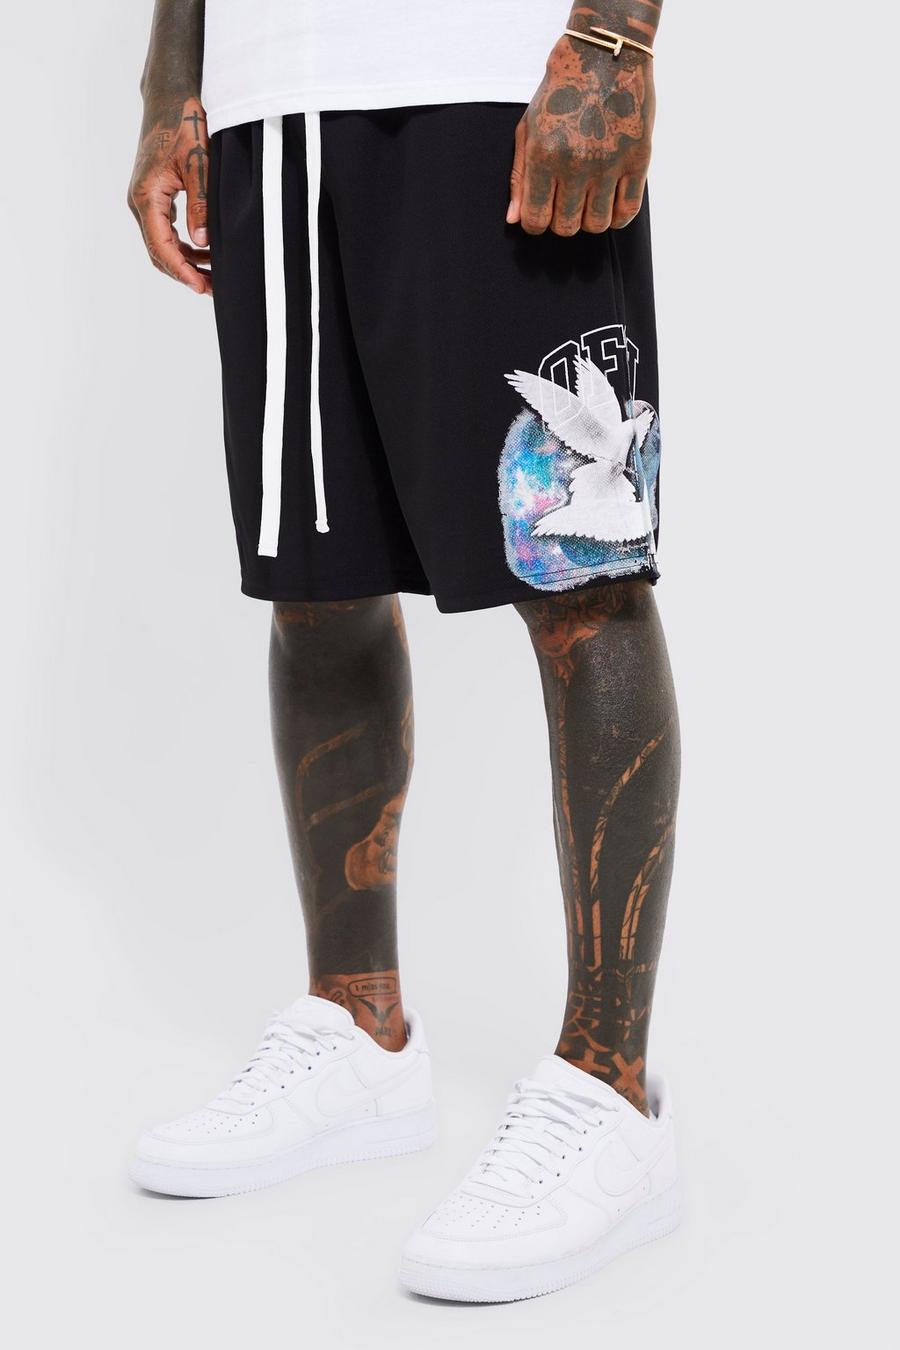 Lockere Basketball-Shorts mit Print, Black noir